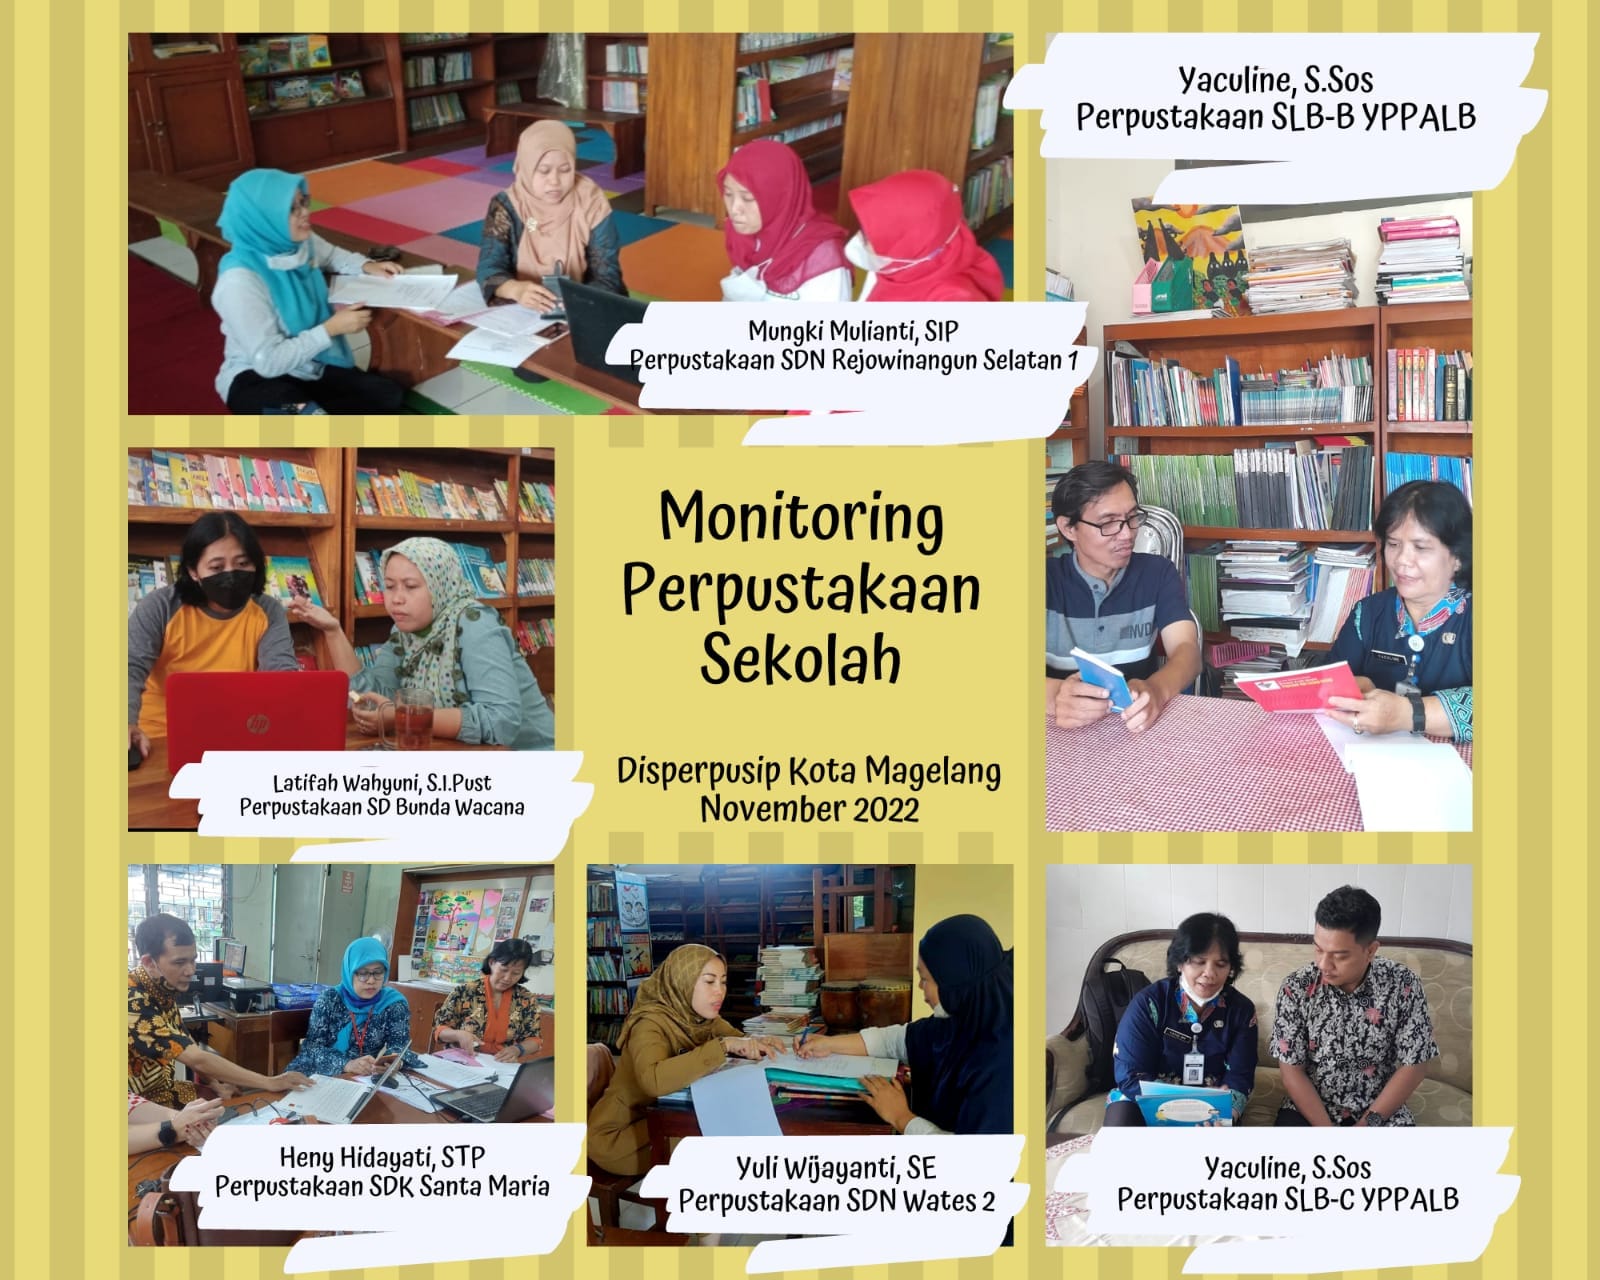 Monitoring Perpustakaan Sekolah Disperpusip Kota Magelang November 2022